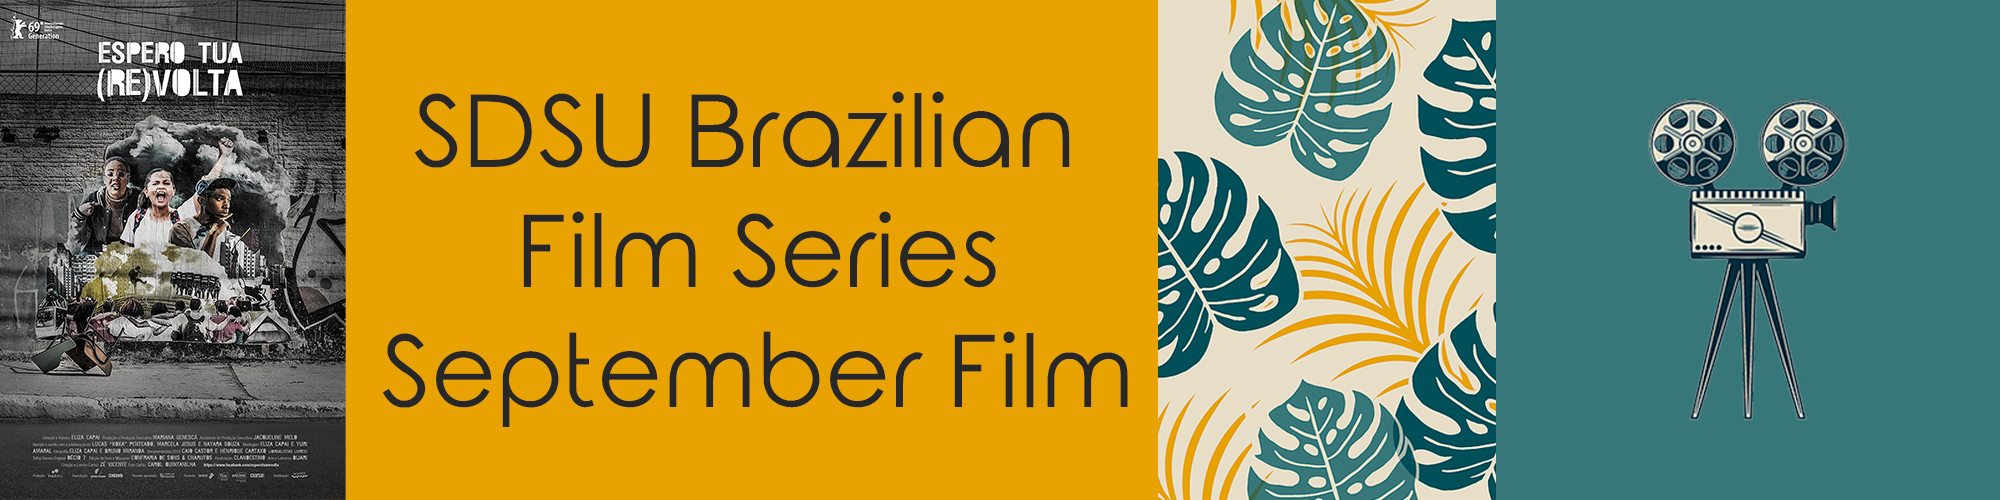 SDSU Brazilian Film Series September Film